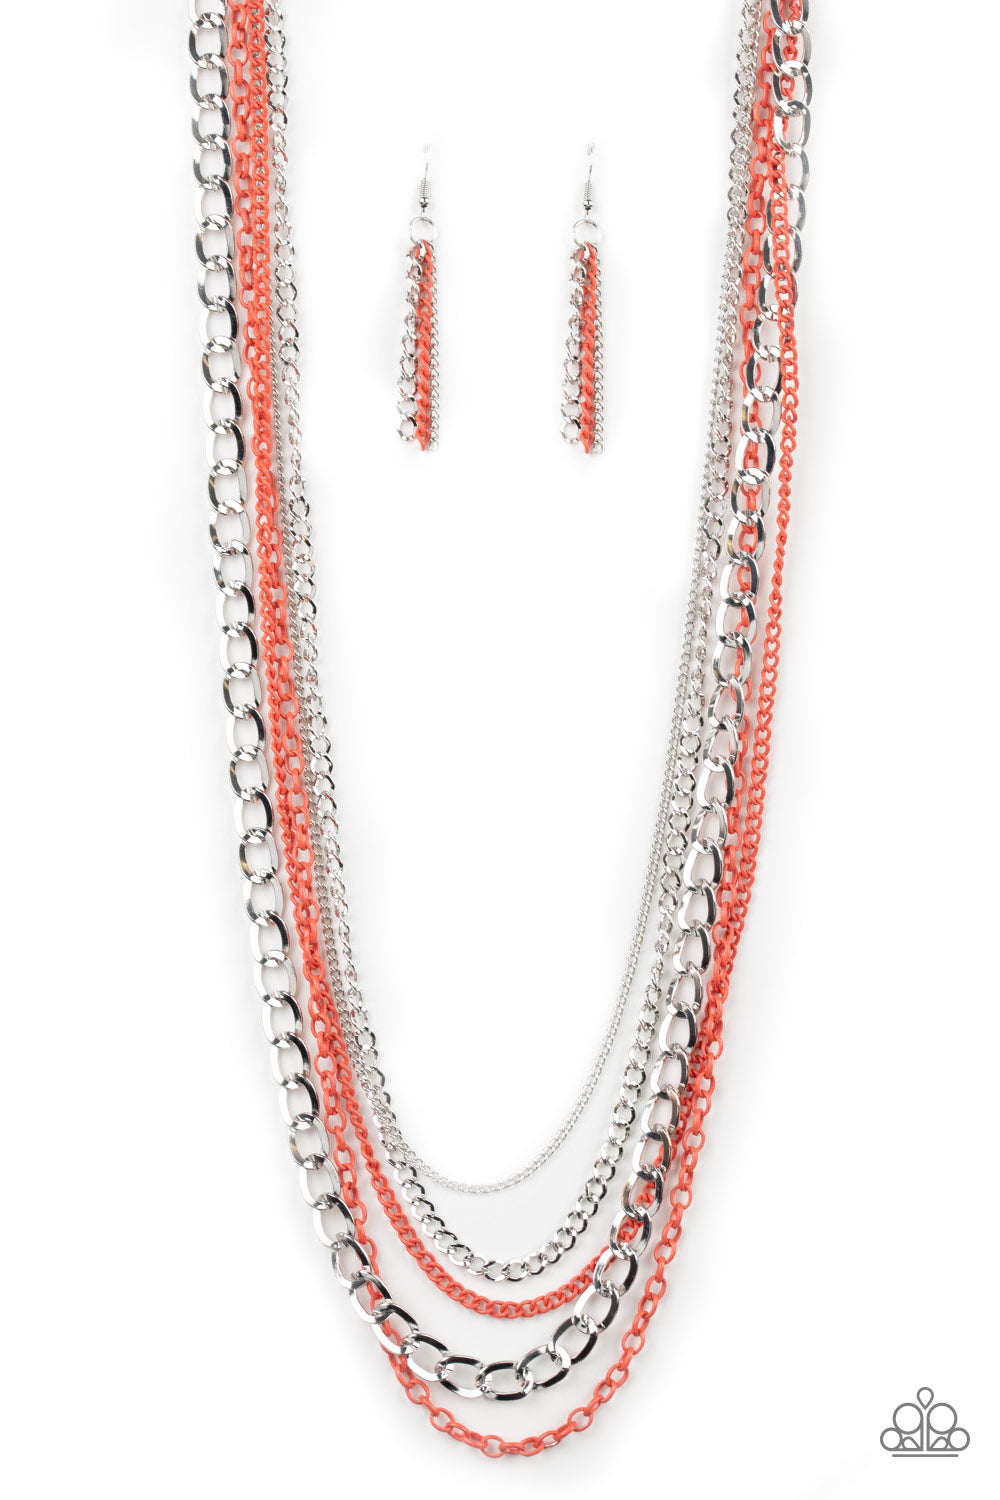 Industrial Vibrance - Orange necklace